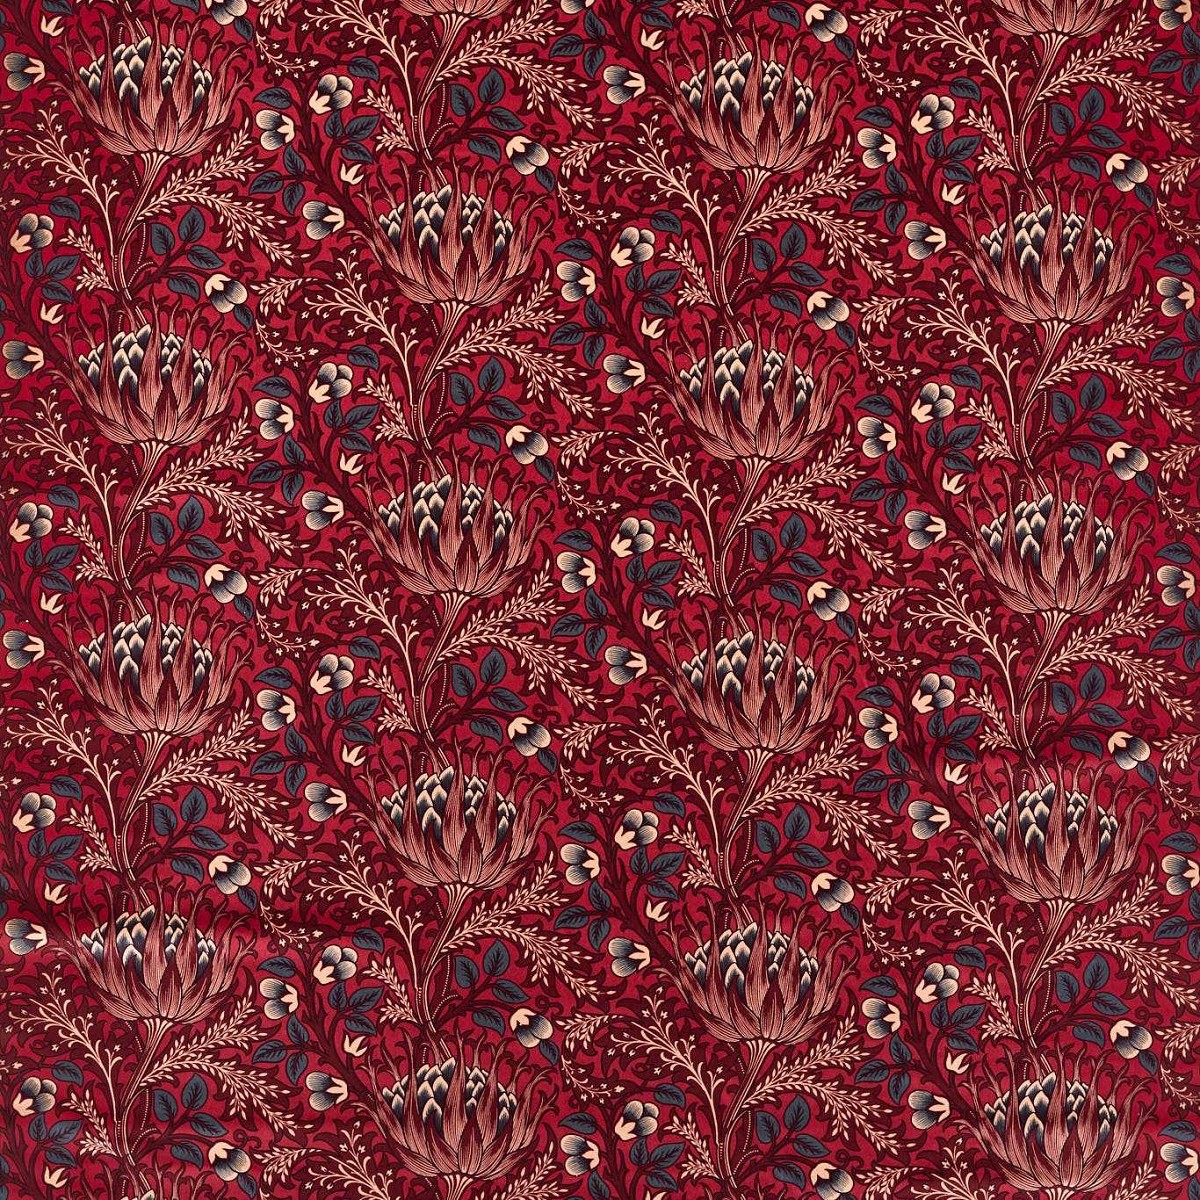 Artichoke Velvet Barbed Berry Fabric by William Morris & Co.